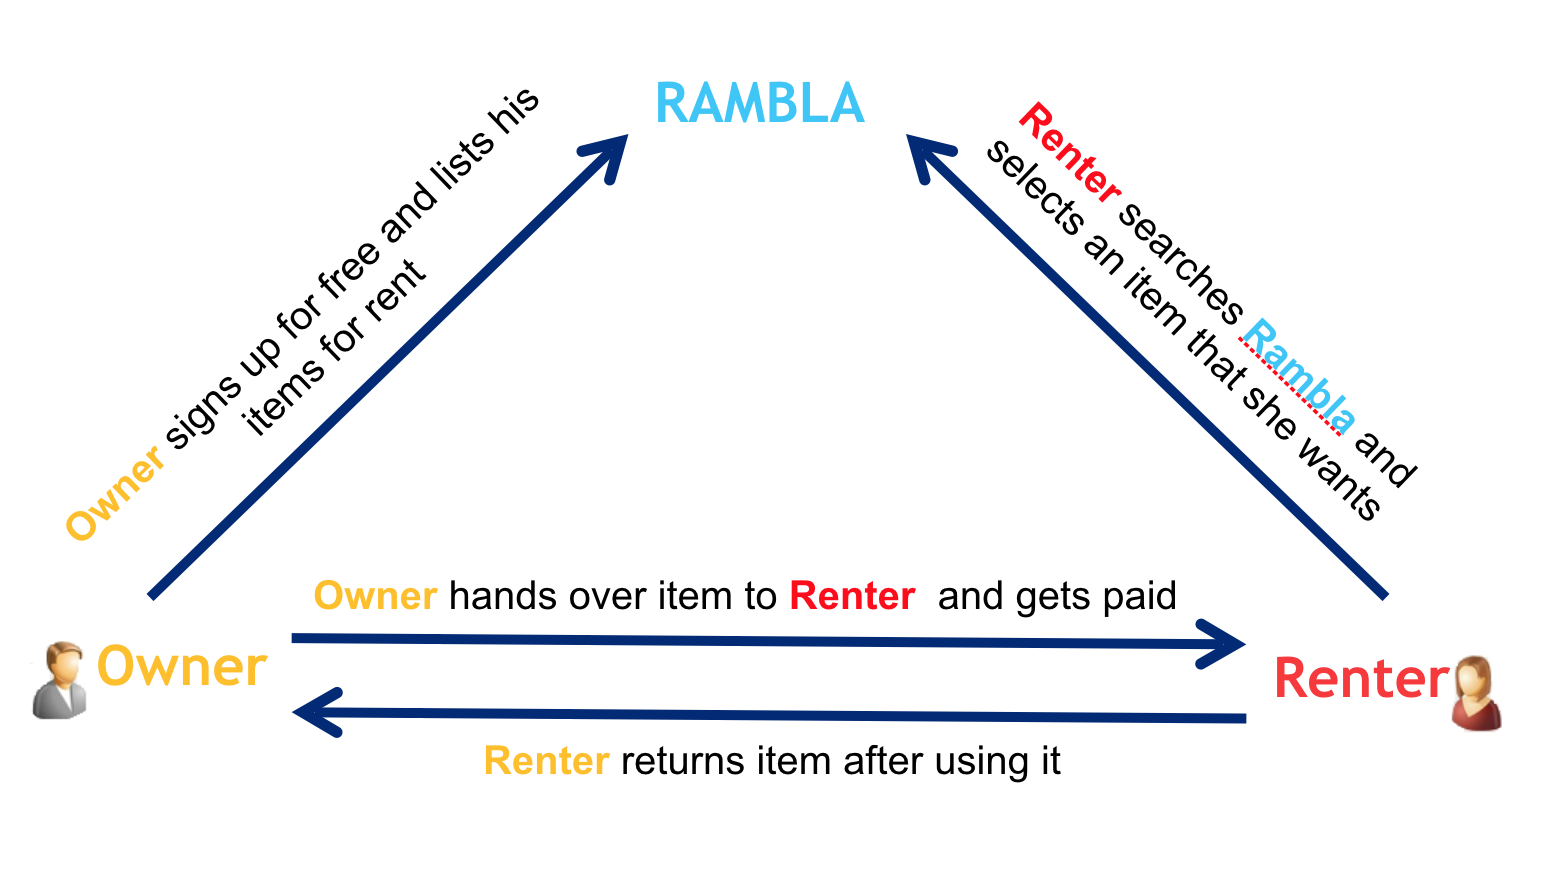 Rambla Rental Model